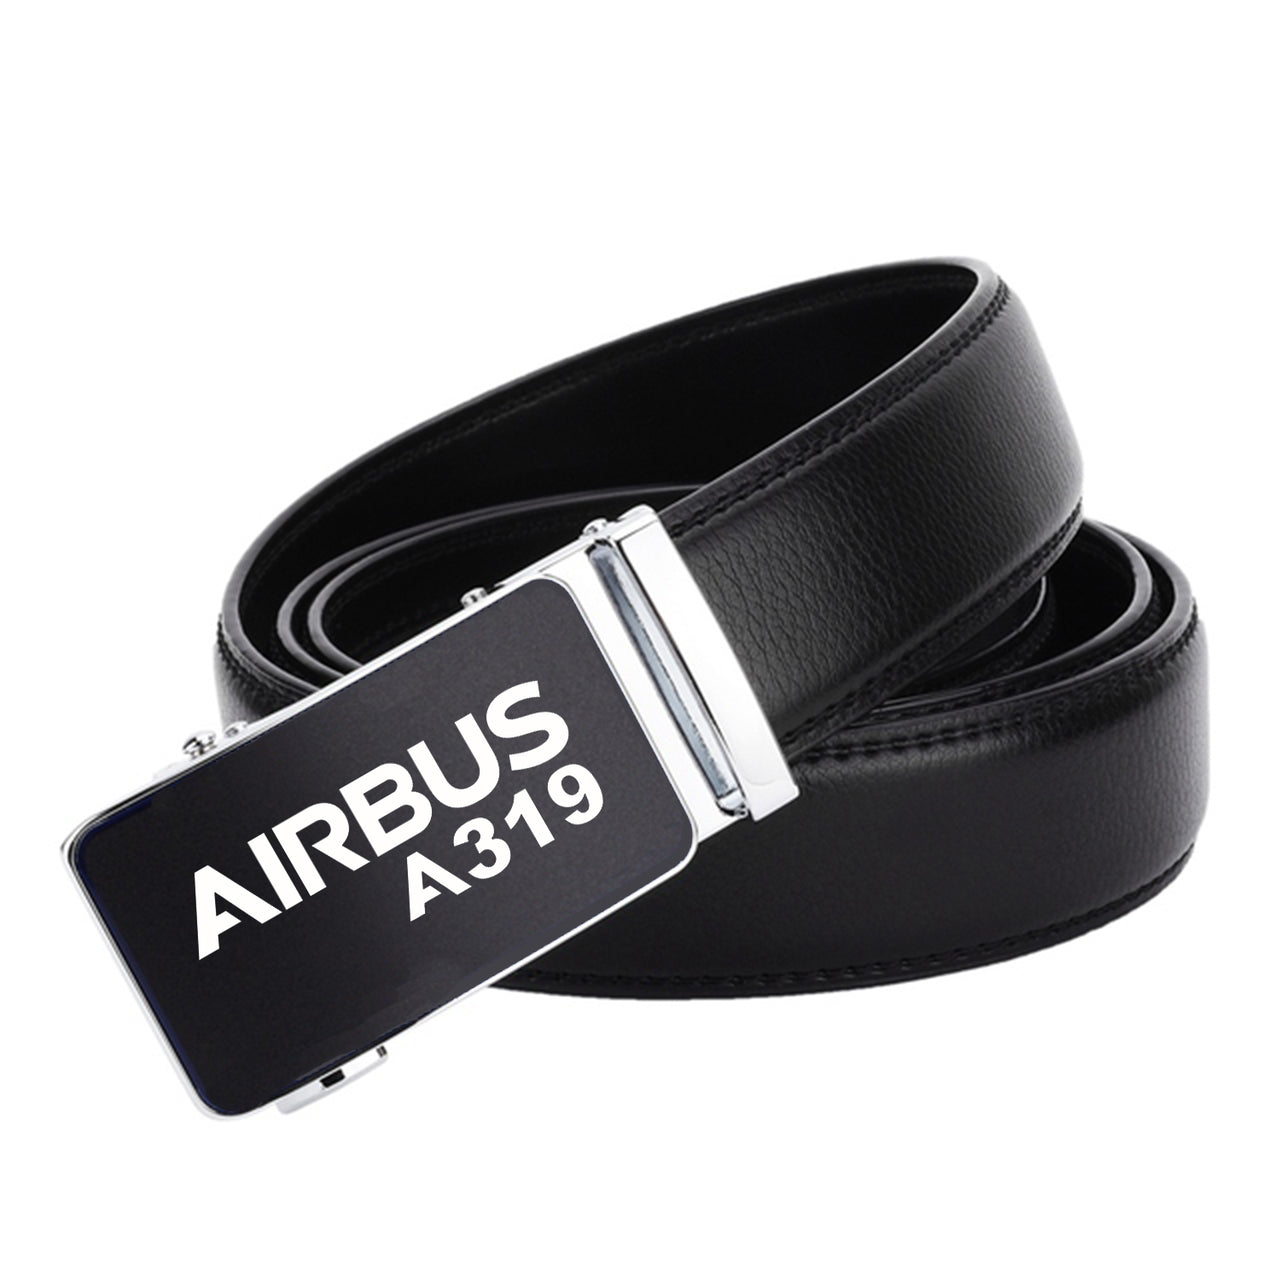 Airbus A319 & Text Designed Men Belts